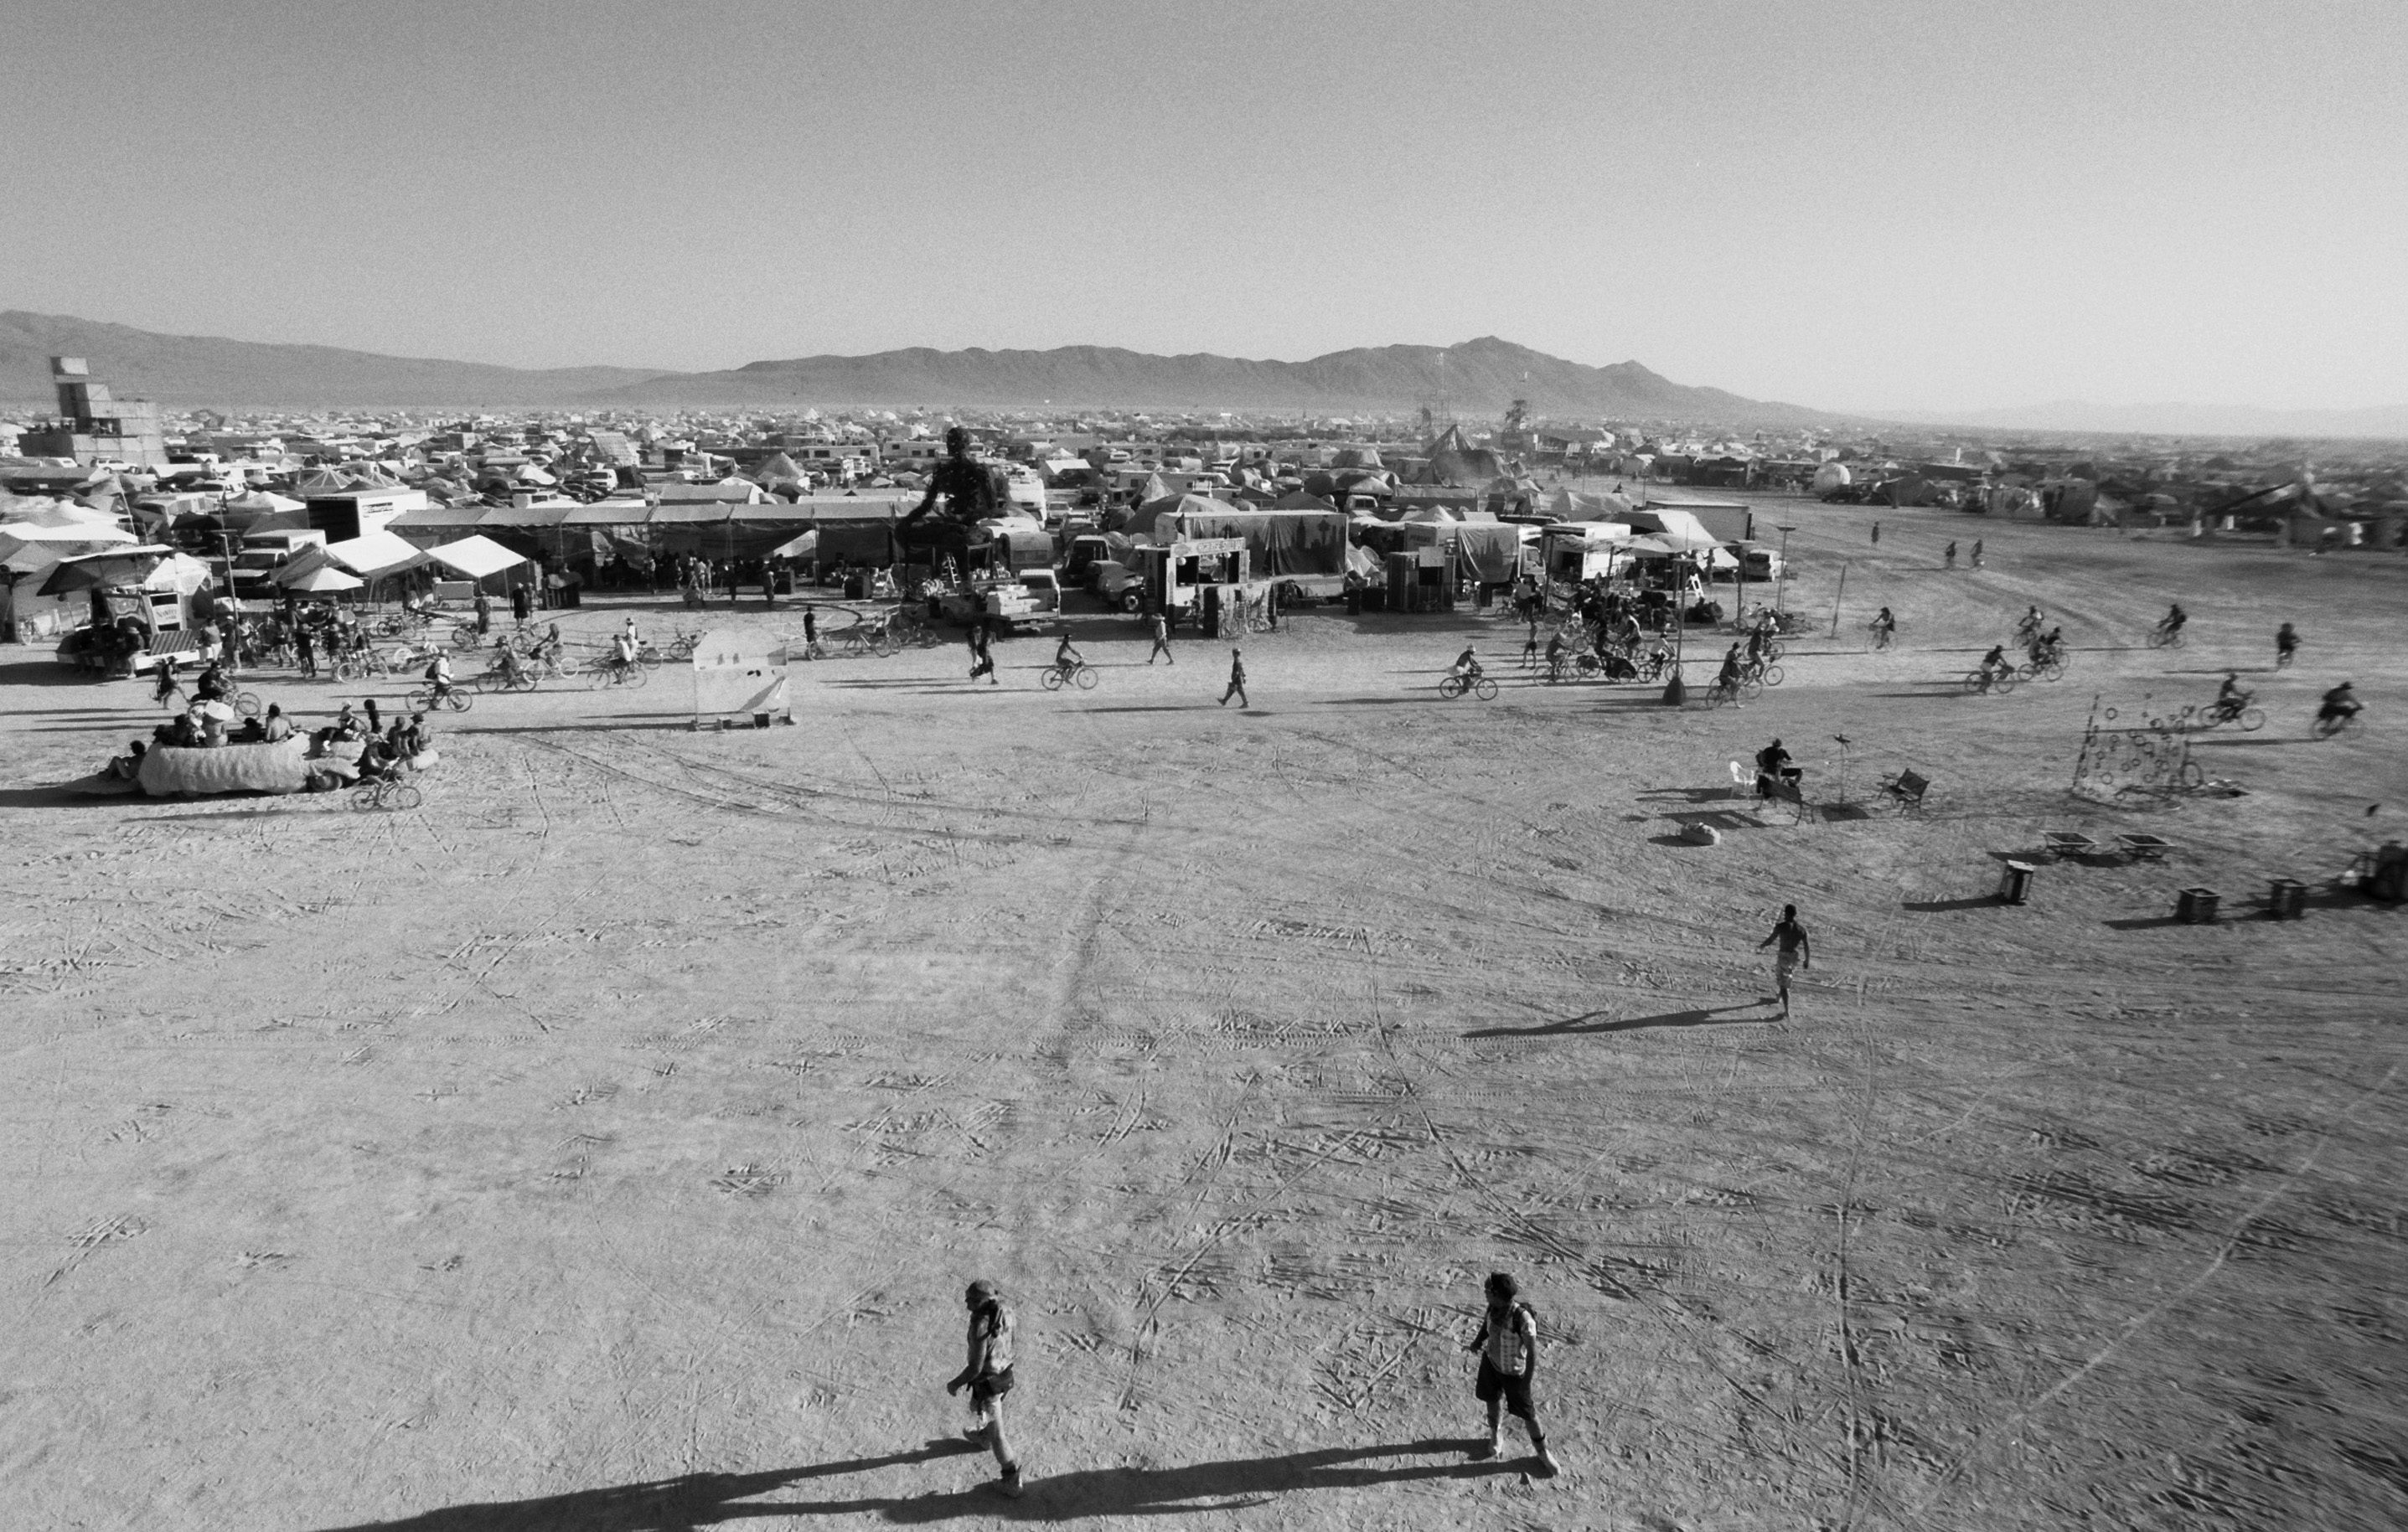 Black Rock City, the temporary city of Burning Man